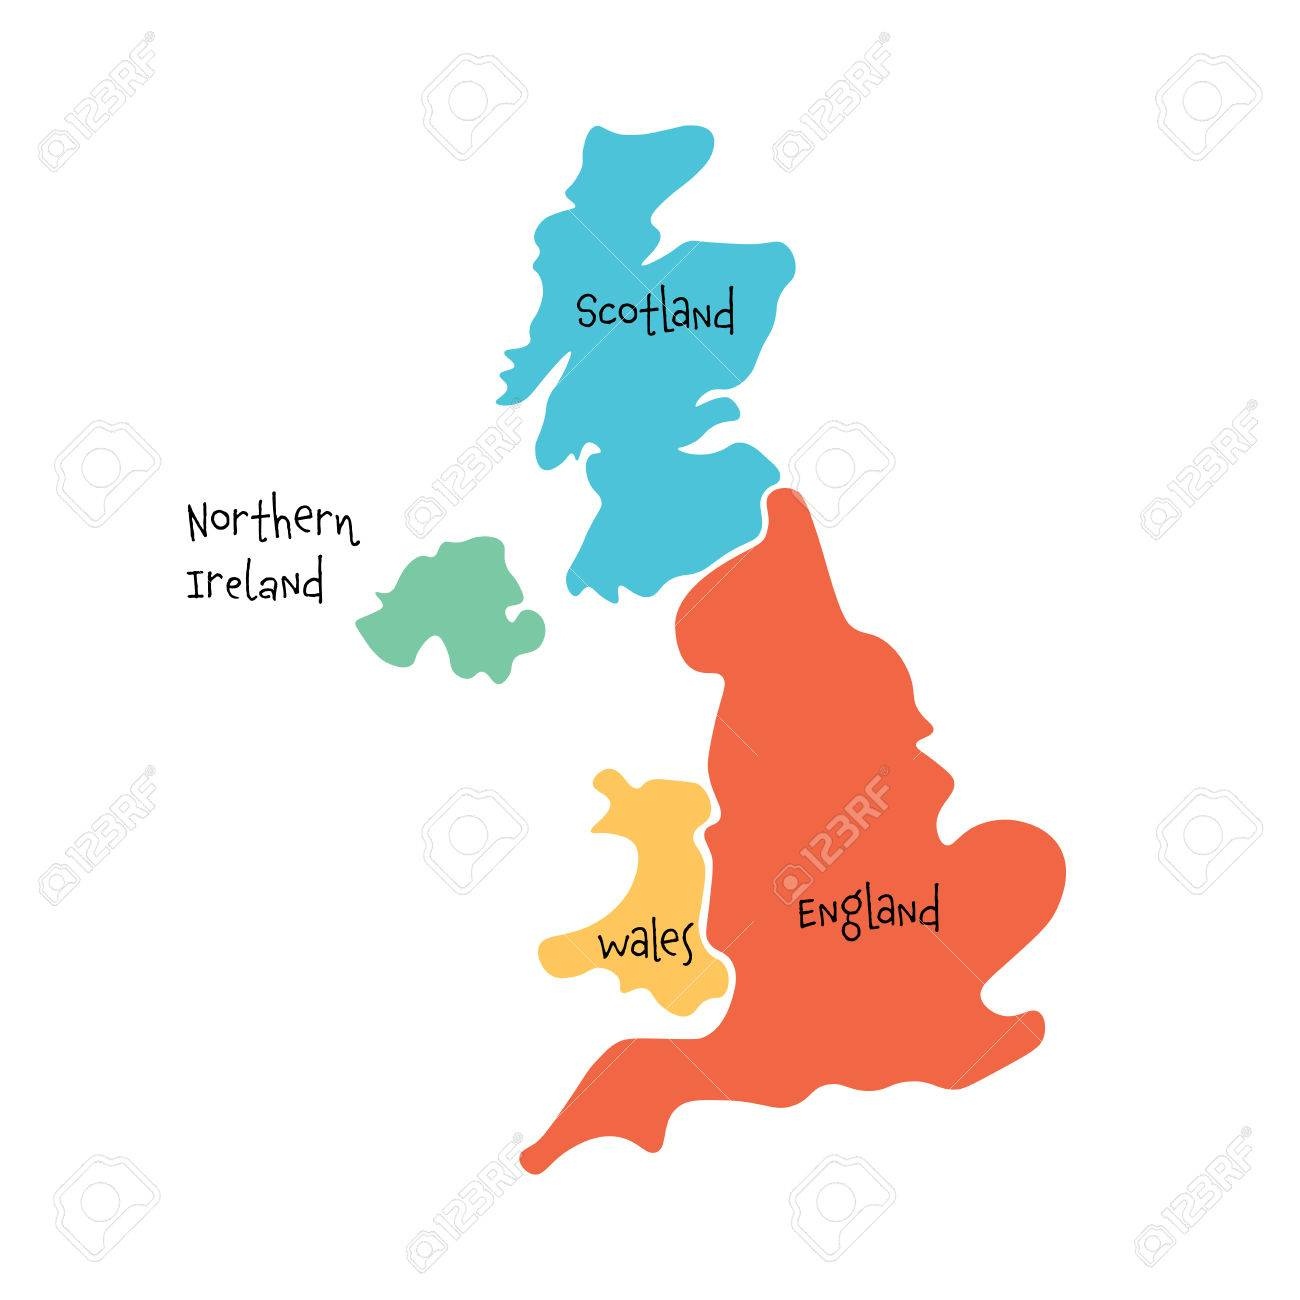 United Kingdom, Aka Uk, Of Great Britain And Northern Ireland - Free Printable Map Of Uk And Ireland